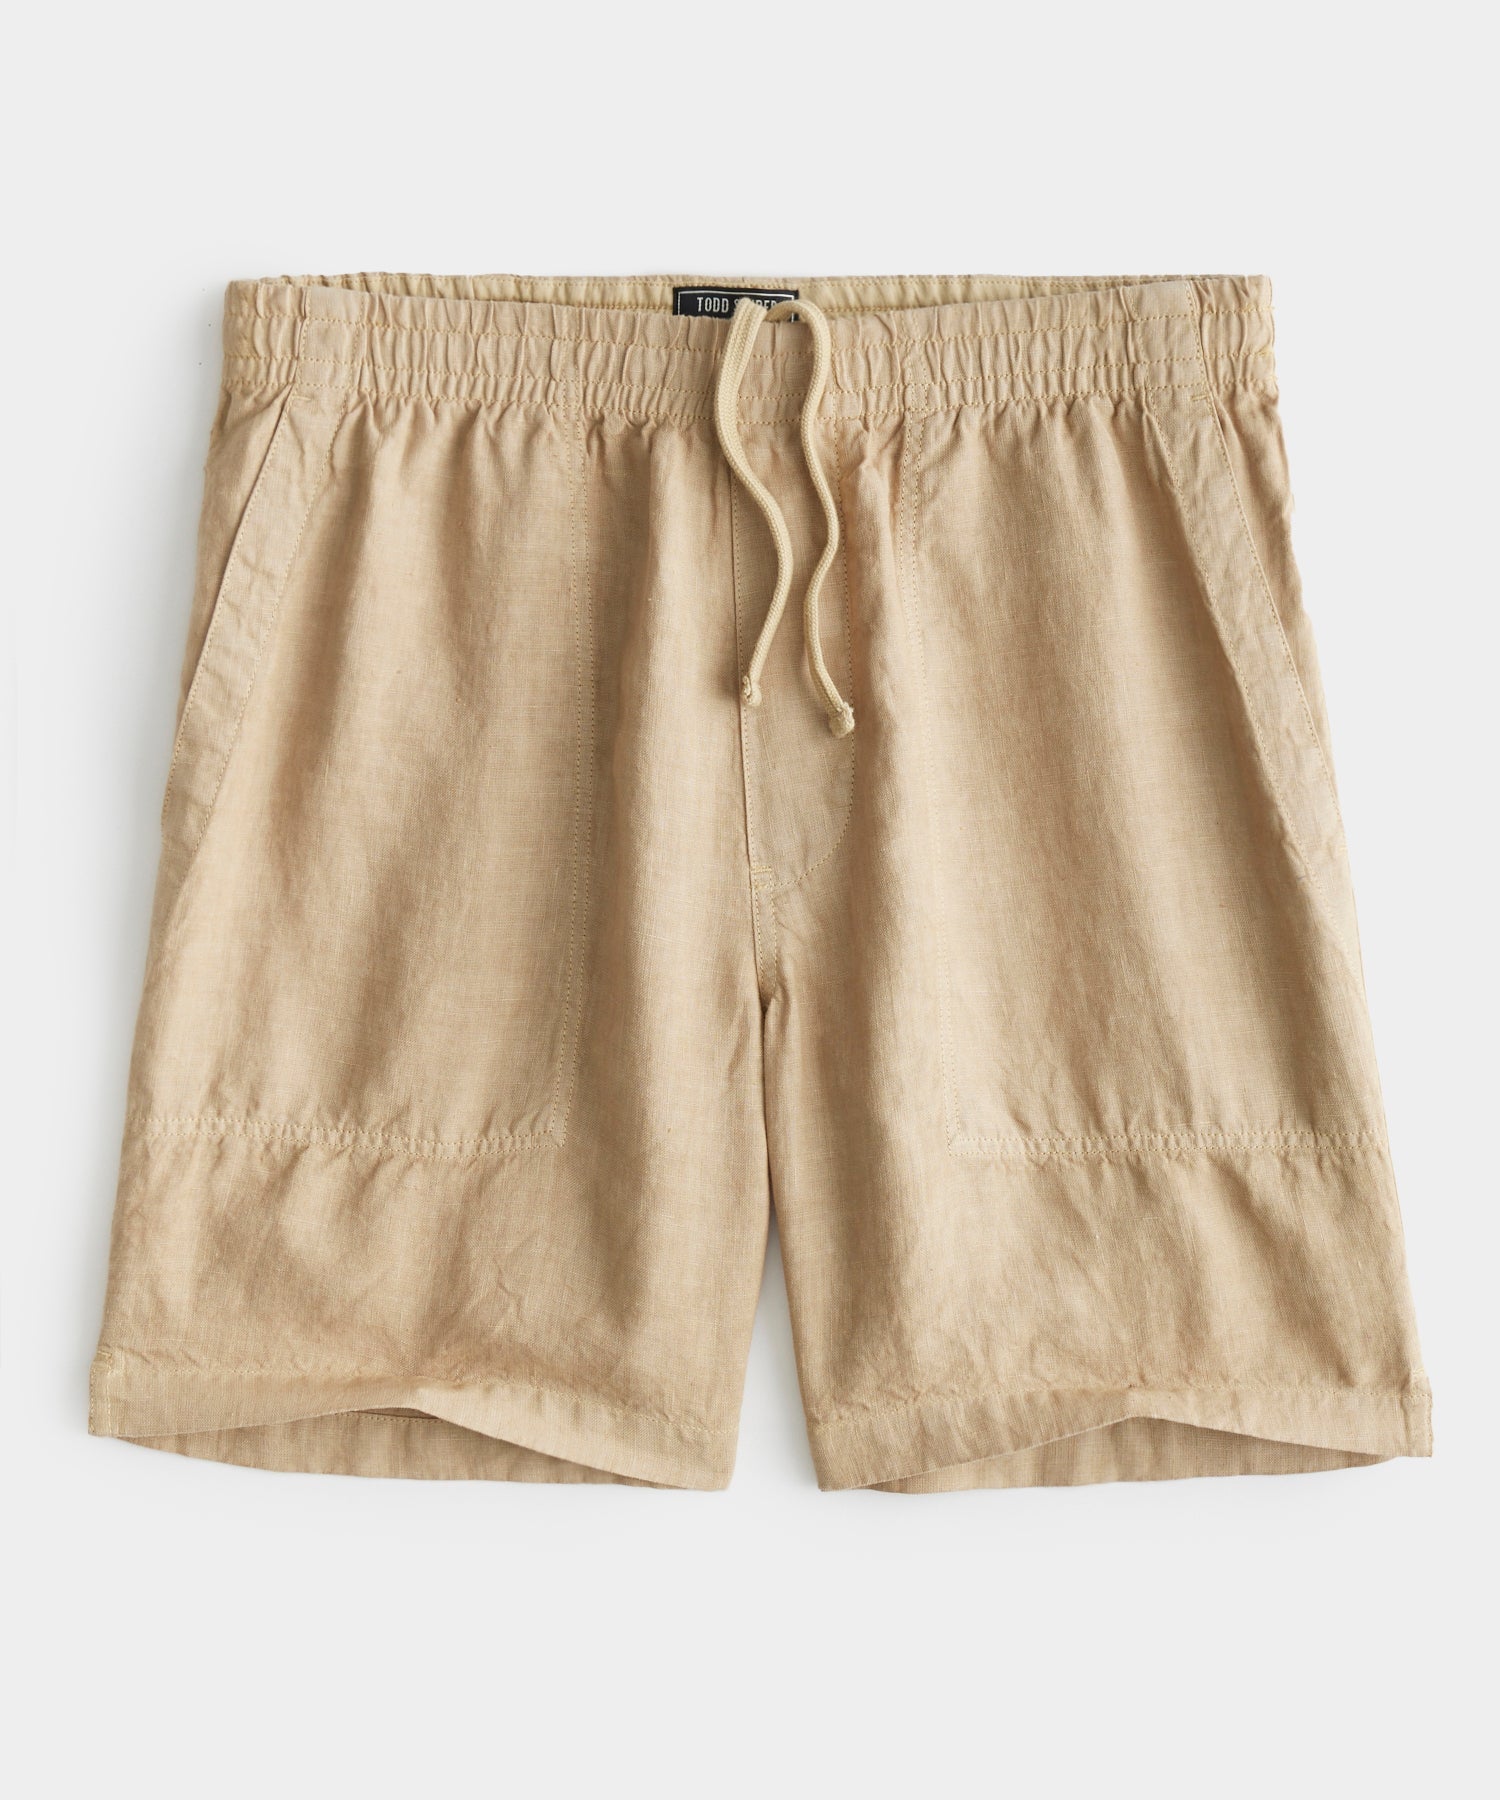 5 Inseam Shorts Men Mens Linen Beach Pants Mens Sweat Shorts